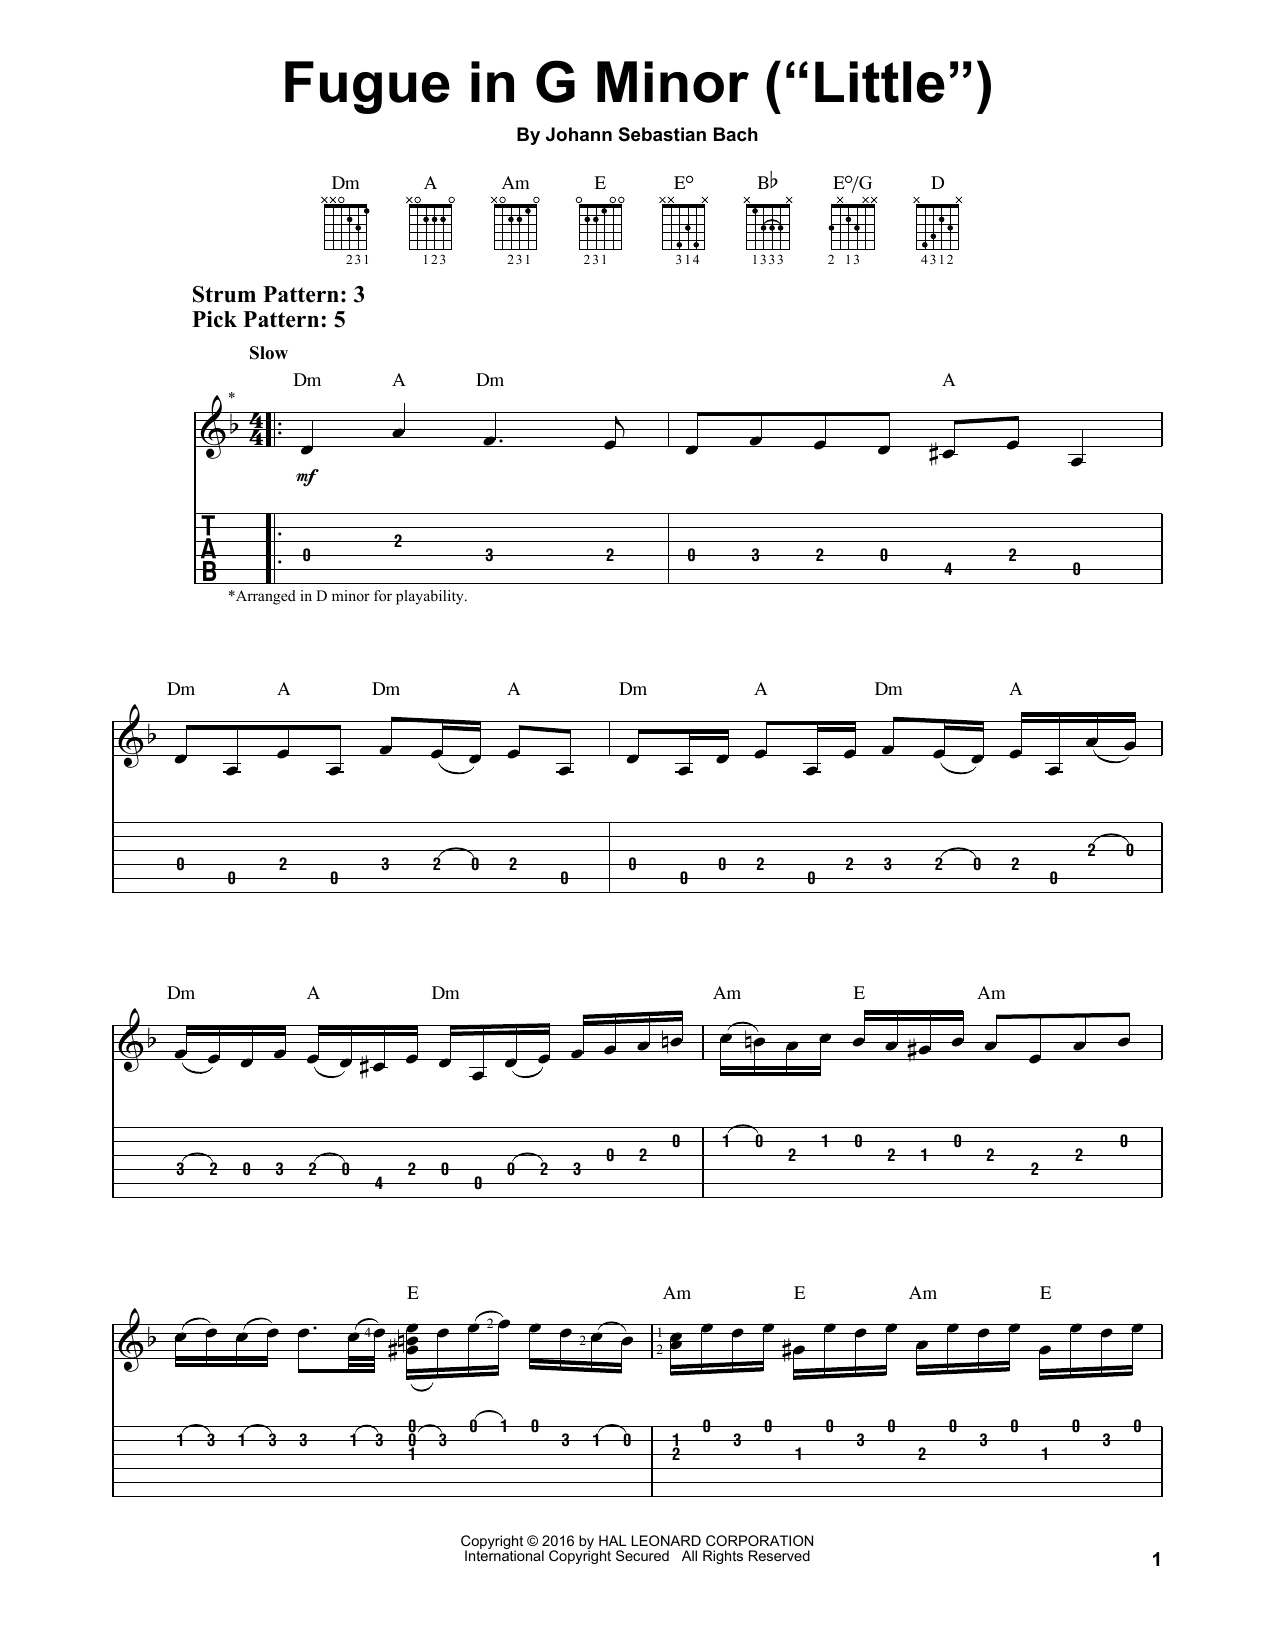 Johann Sebastian Bach Fugue In G Minor (Little) Sheet Music Notes & Chords for Easy Guitar Tab - Download or Print PDF